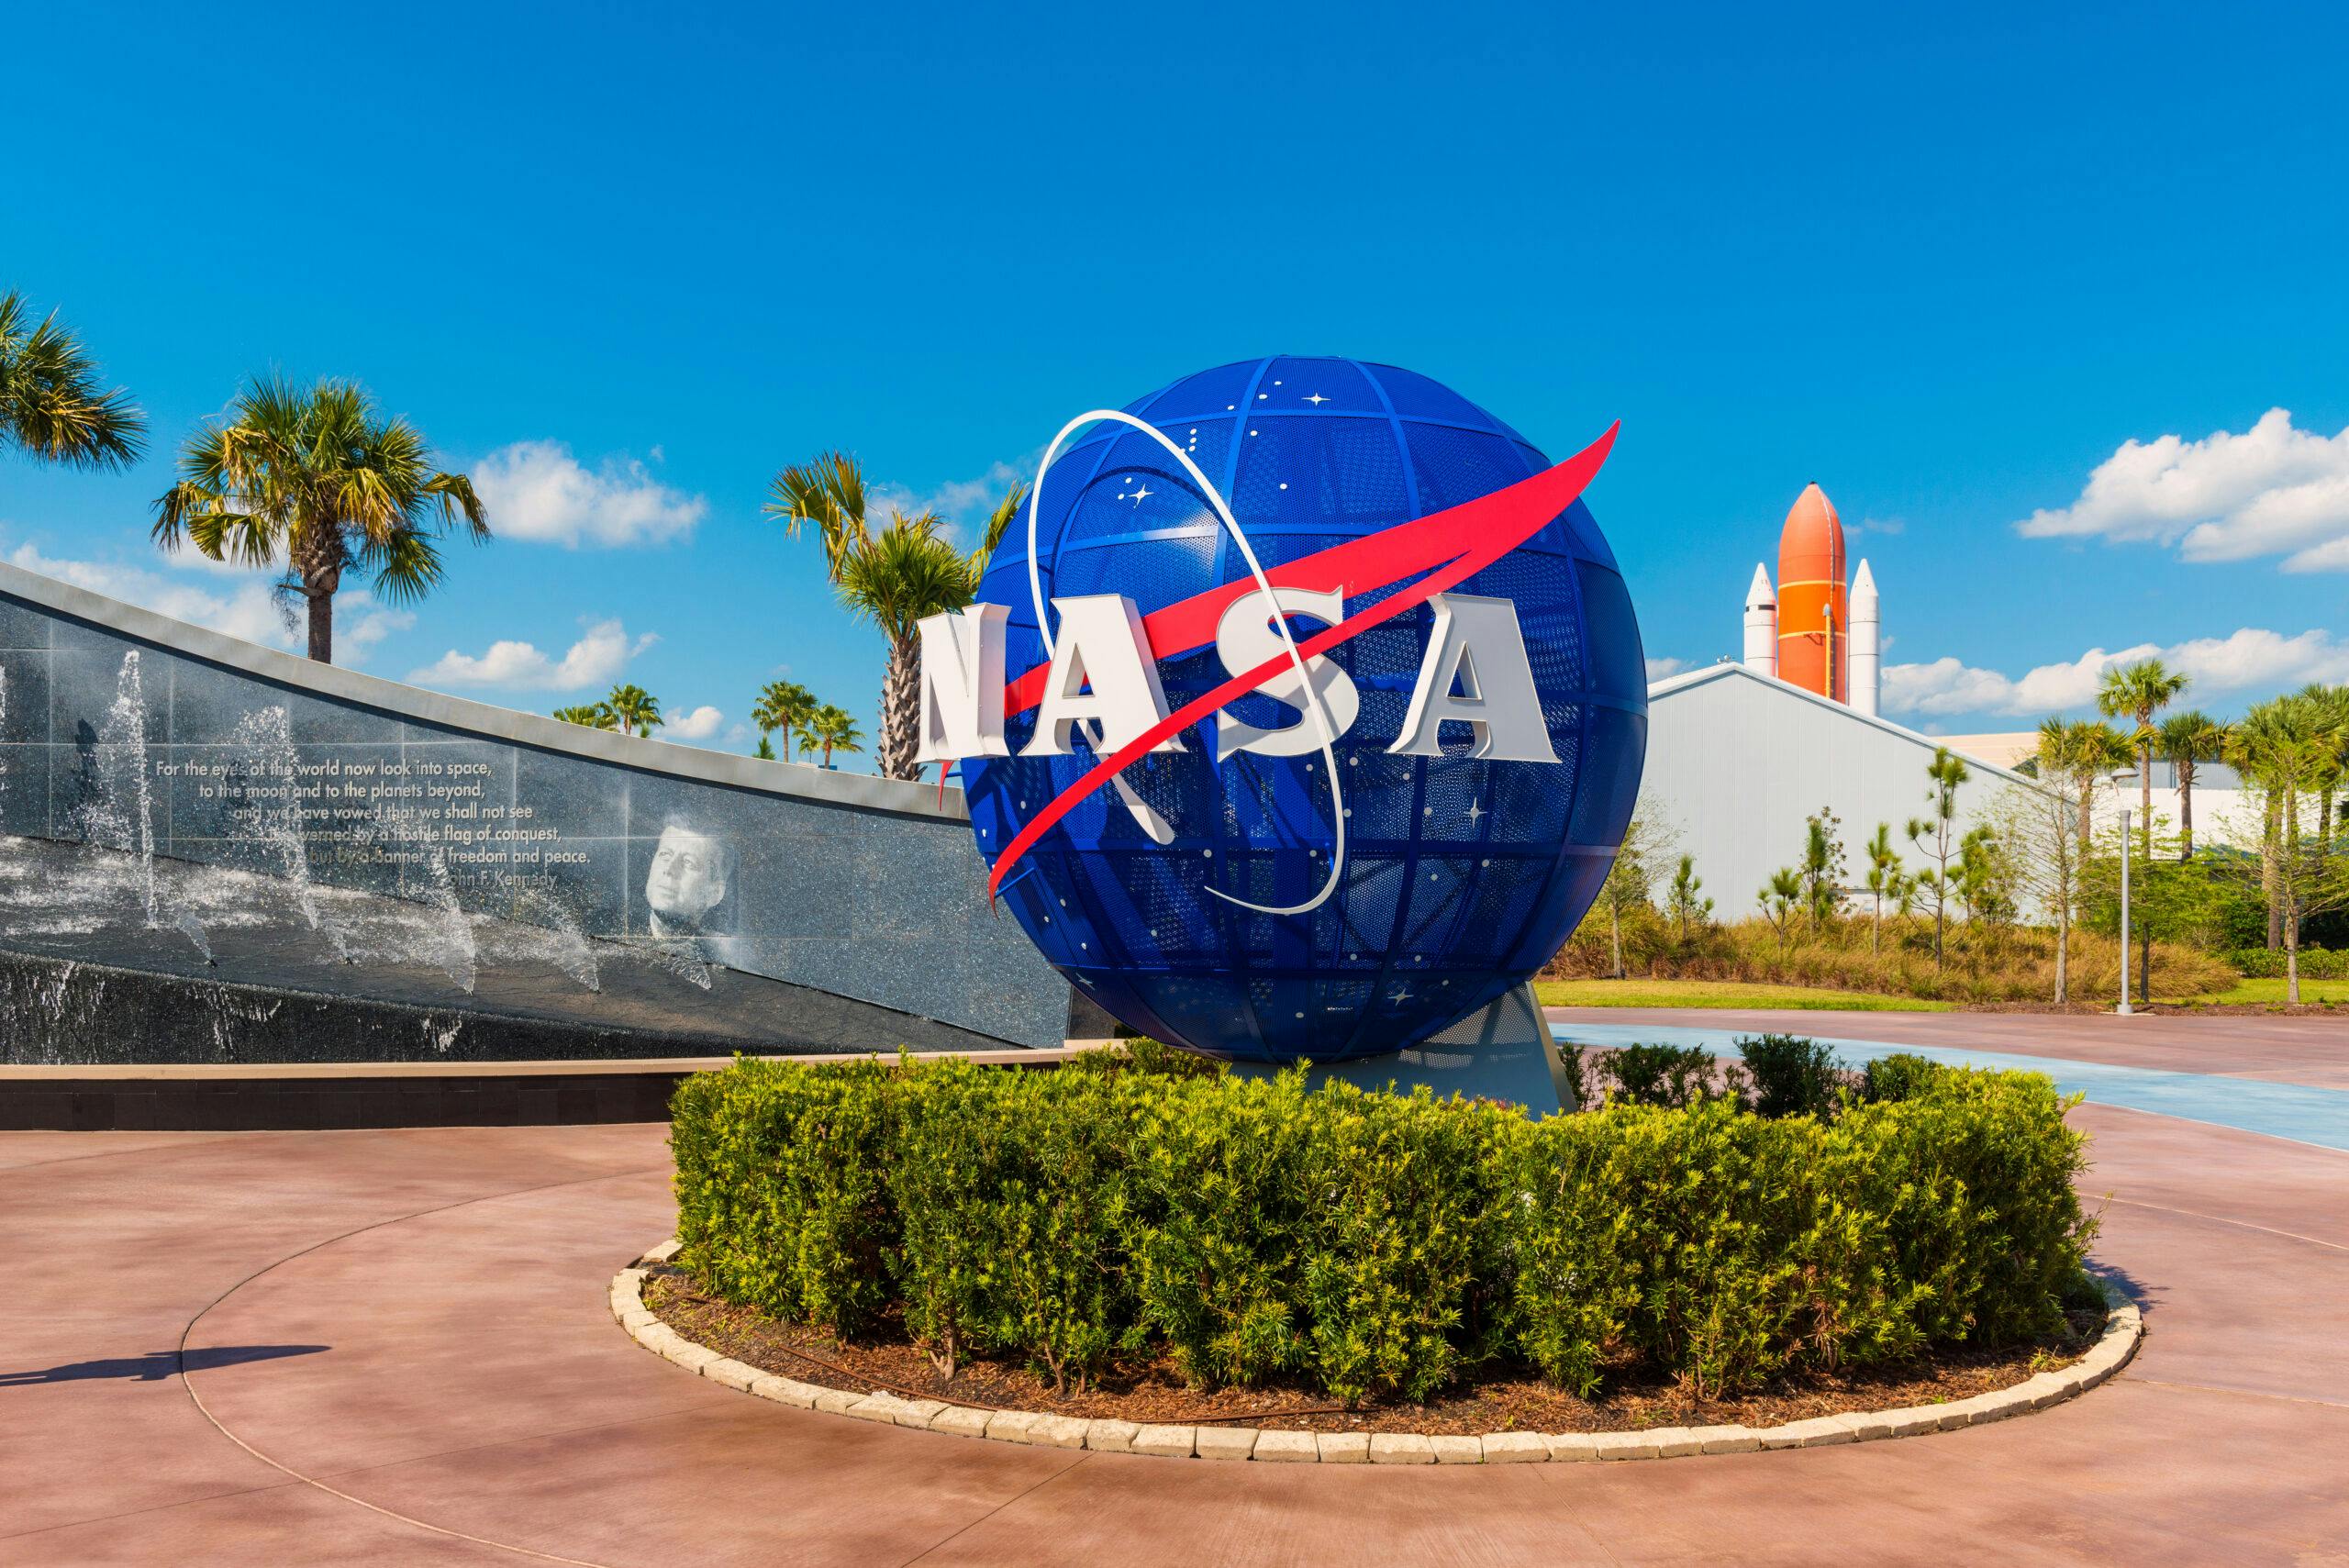 Image of NASA globe sculpture.